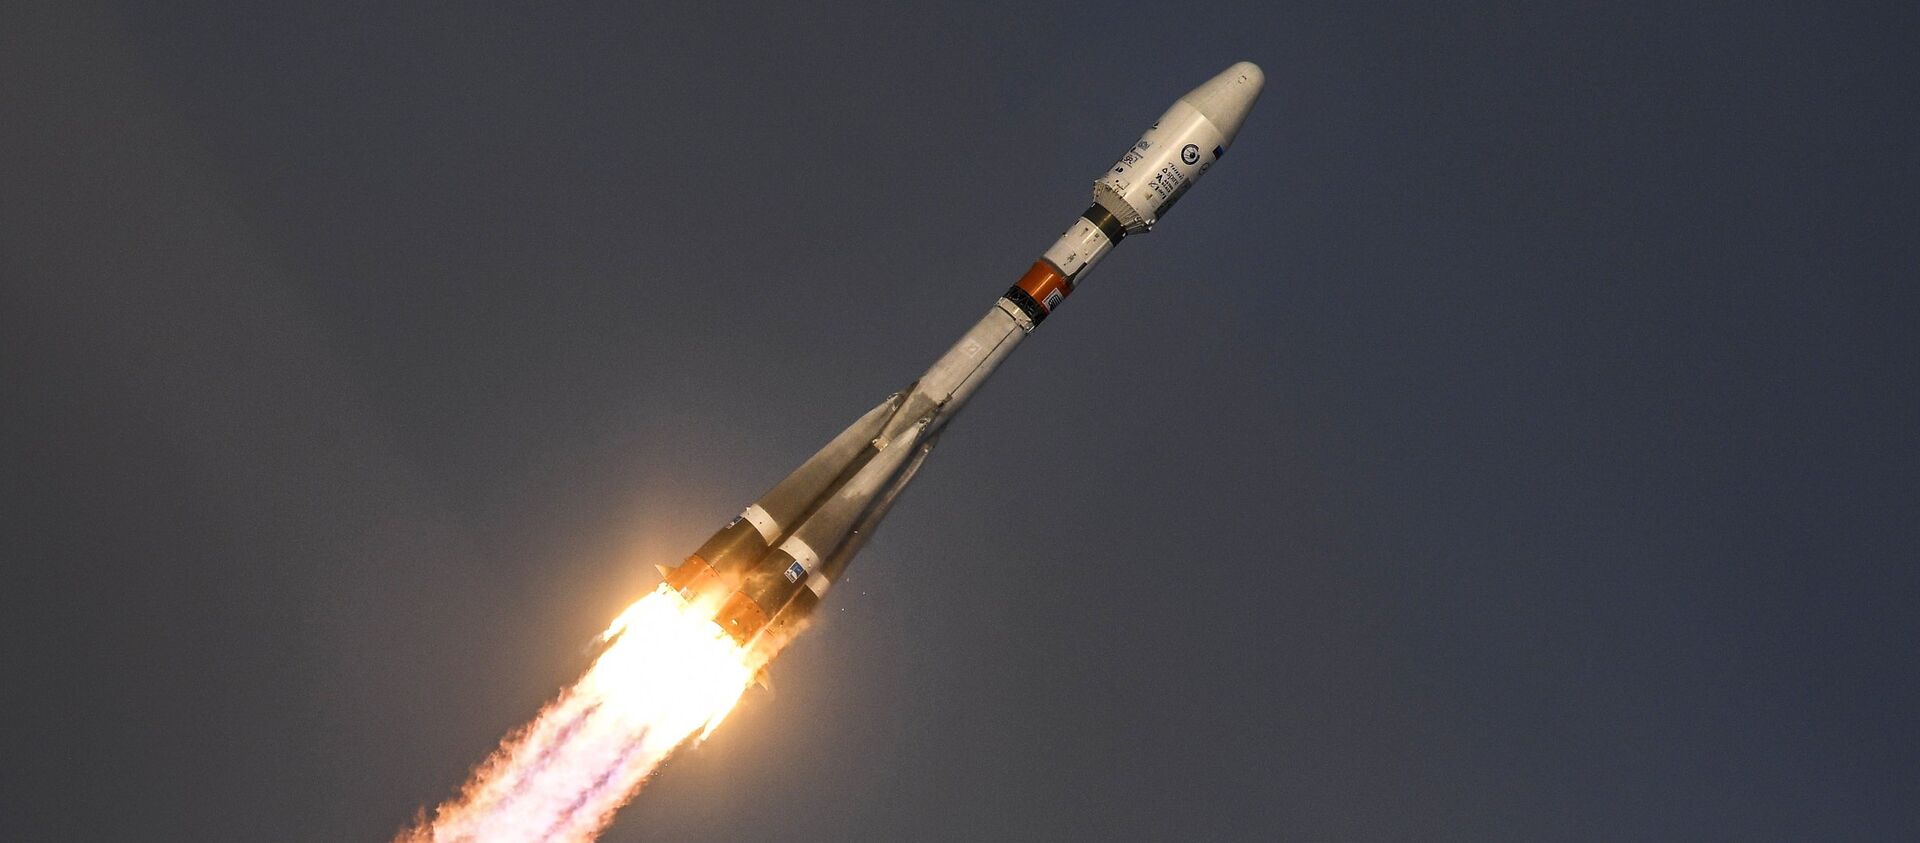 The launch of the Soyuz-2.1b carrier rocket at the Vostochny Space Center - Sputnik International, 1920, 16.06.2018